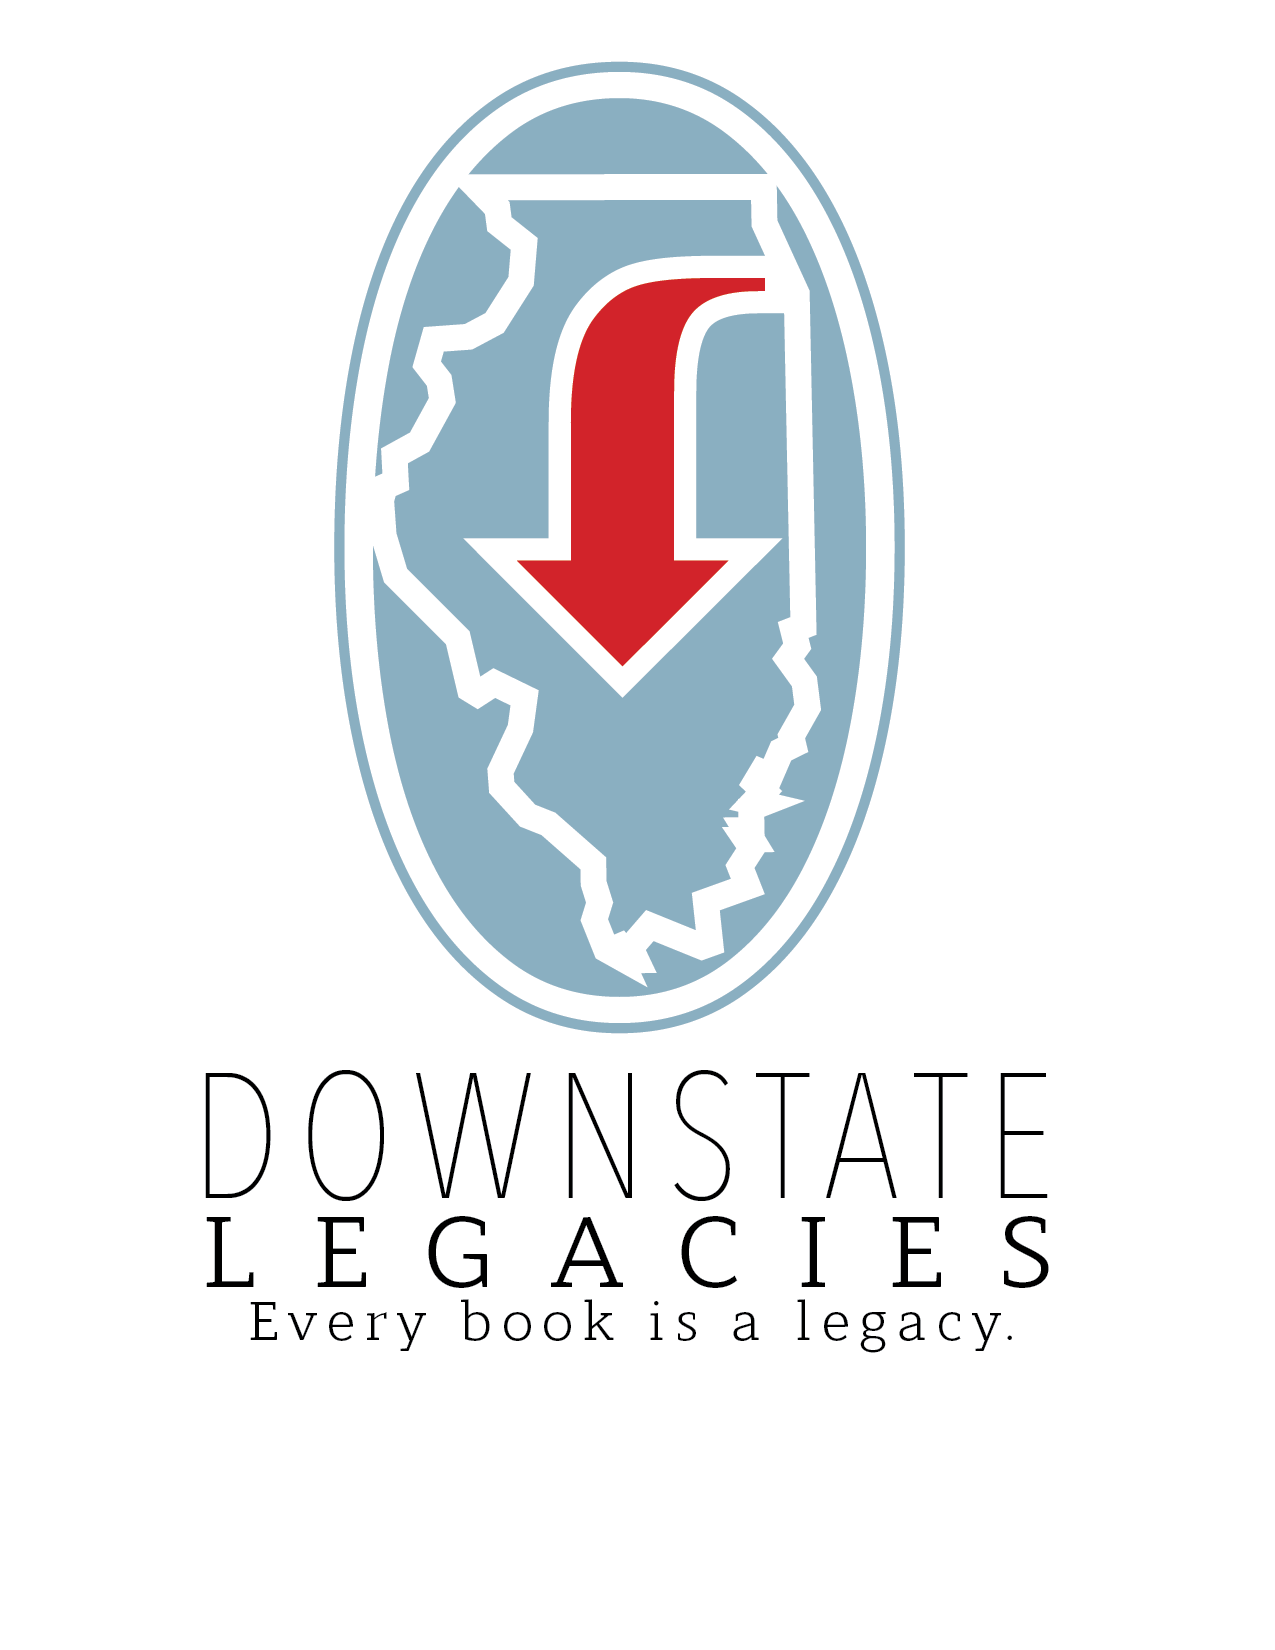 Downstate Legacies logo